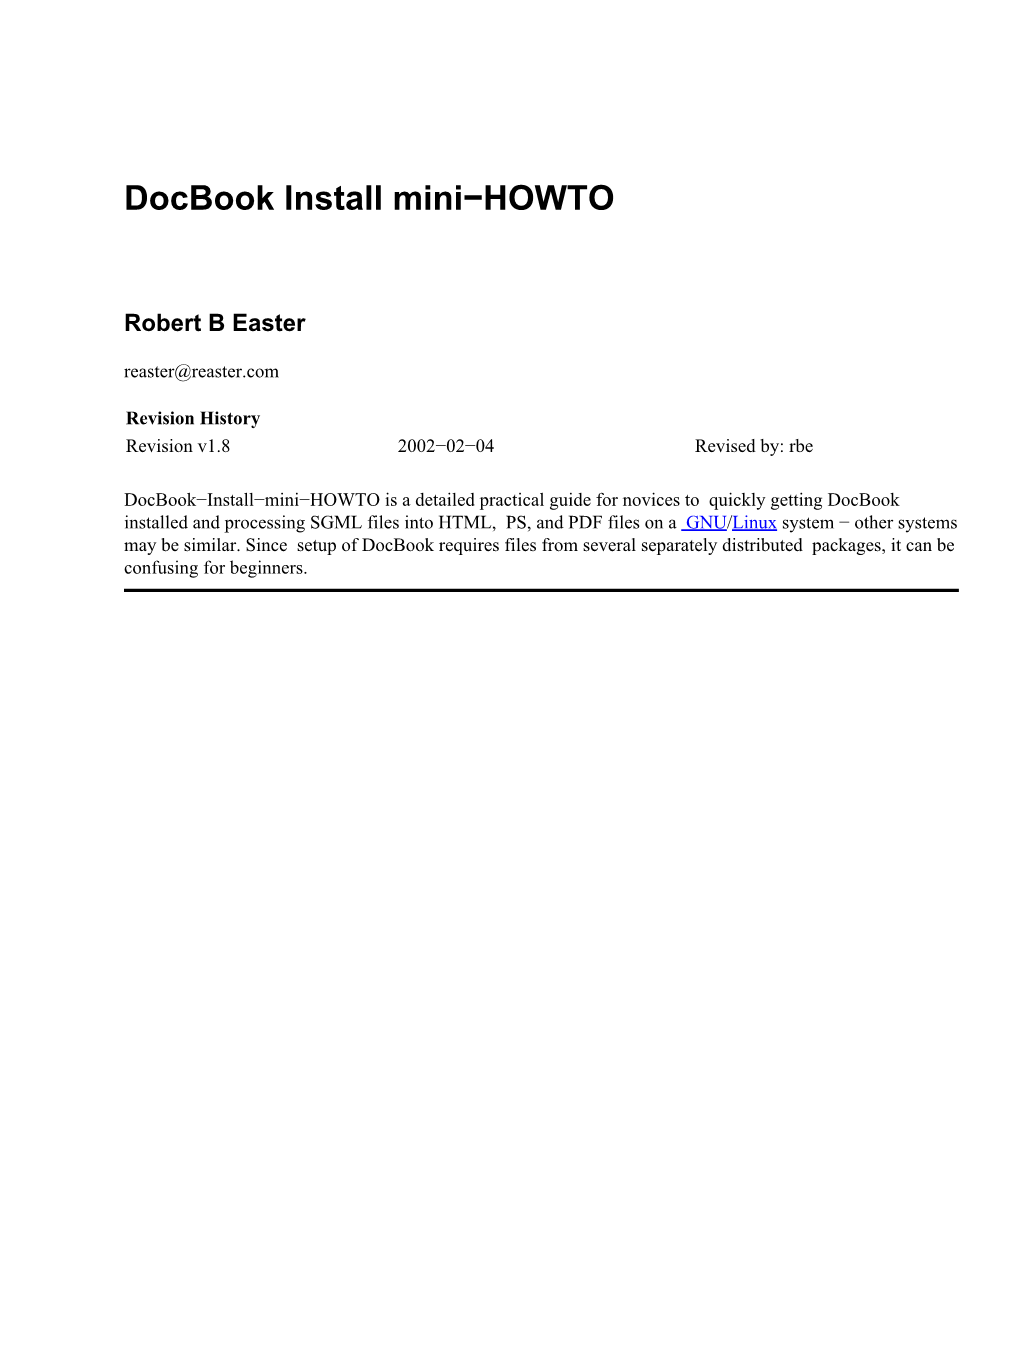 Docbook Install Mini-HOWTO